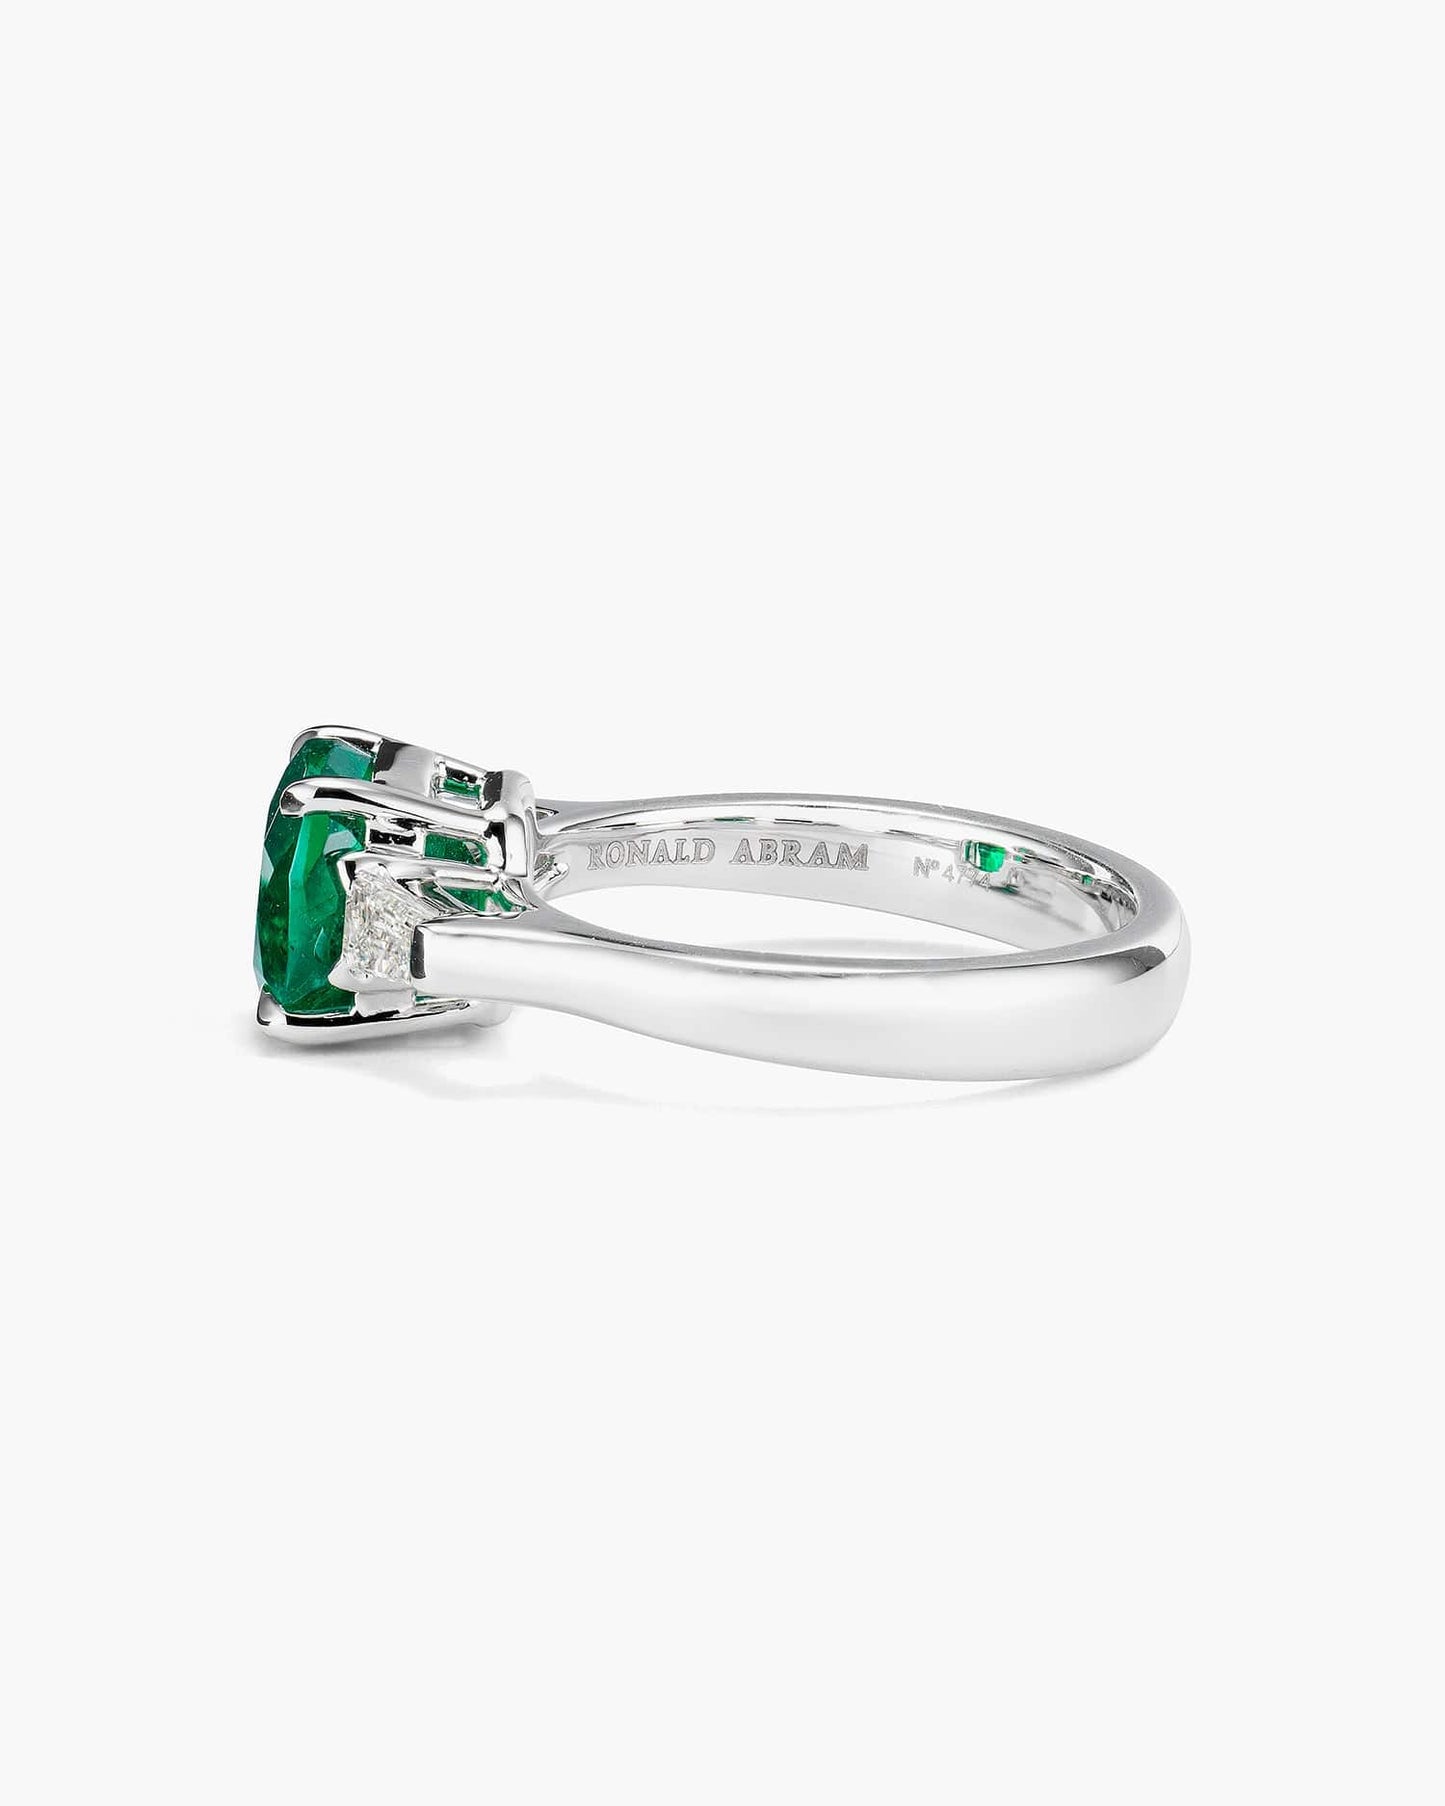 2.21 carat Cushion Cut Colombian Emerald and Diamond Ring